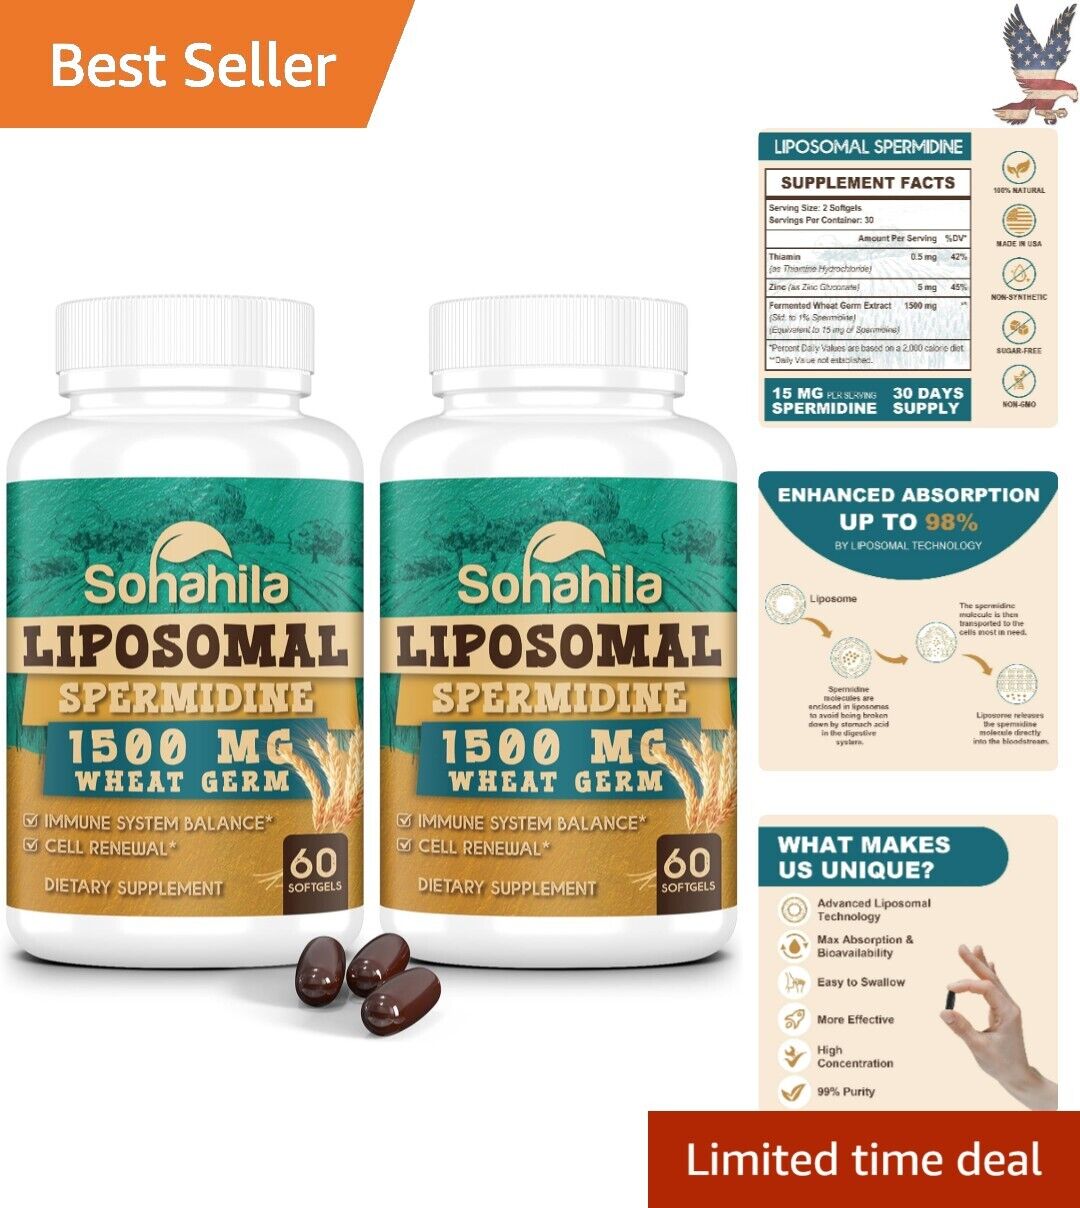 Advanced Liposomal Spermidine Supplement - Fermented Premium 15mg, 120 Count